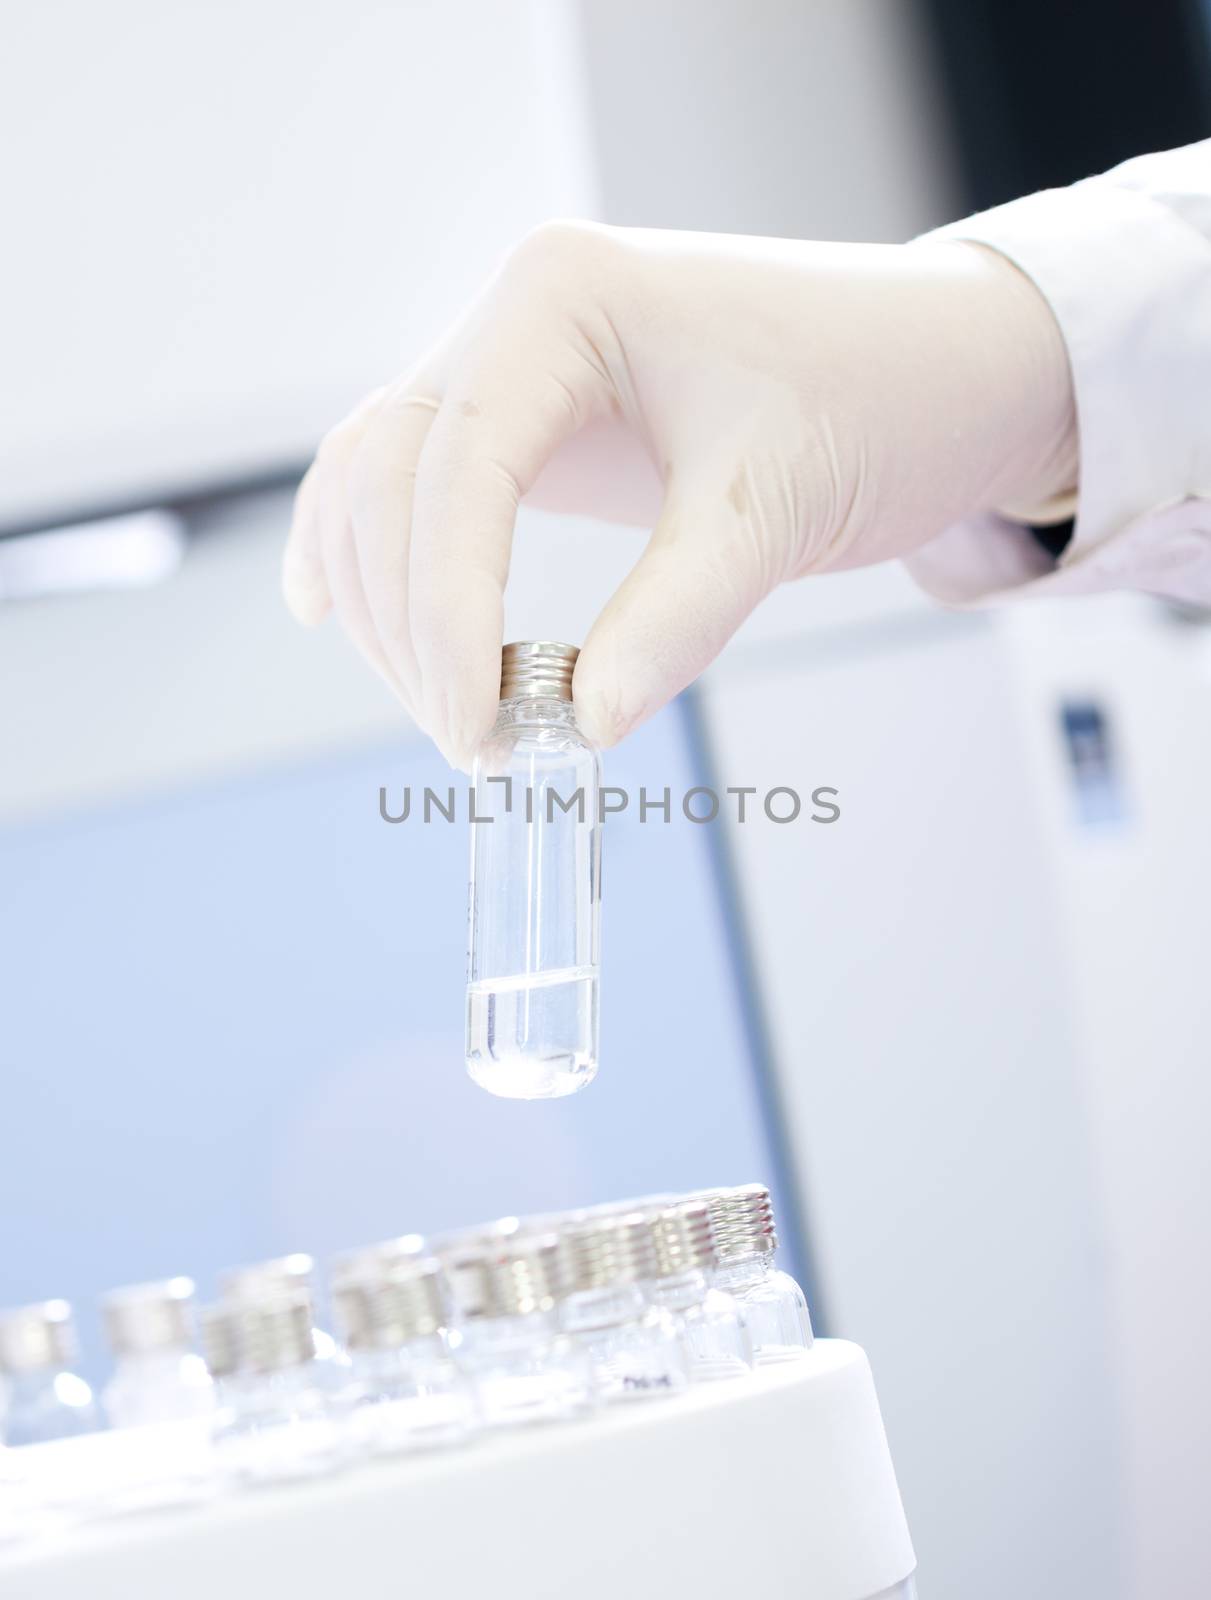 Technician loading sample vials in autosampler rack.